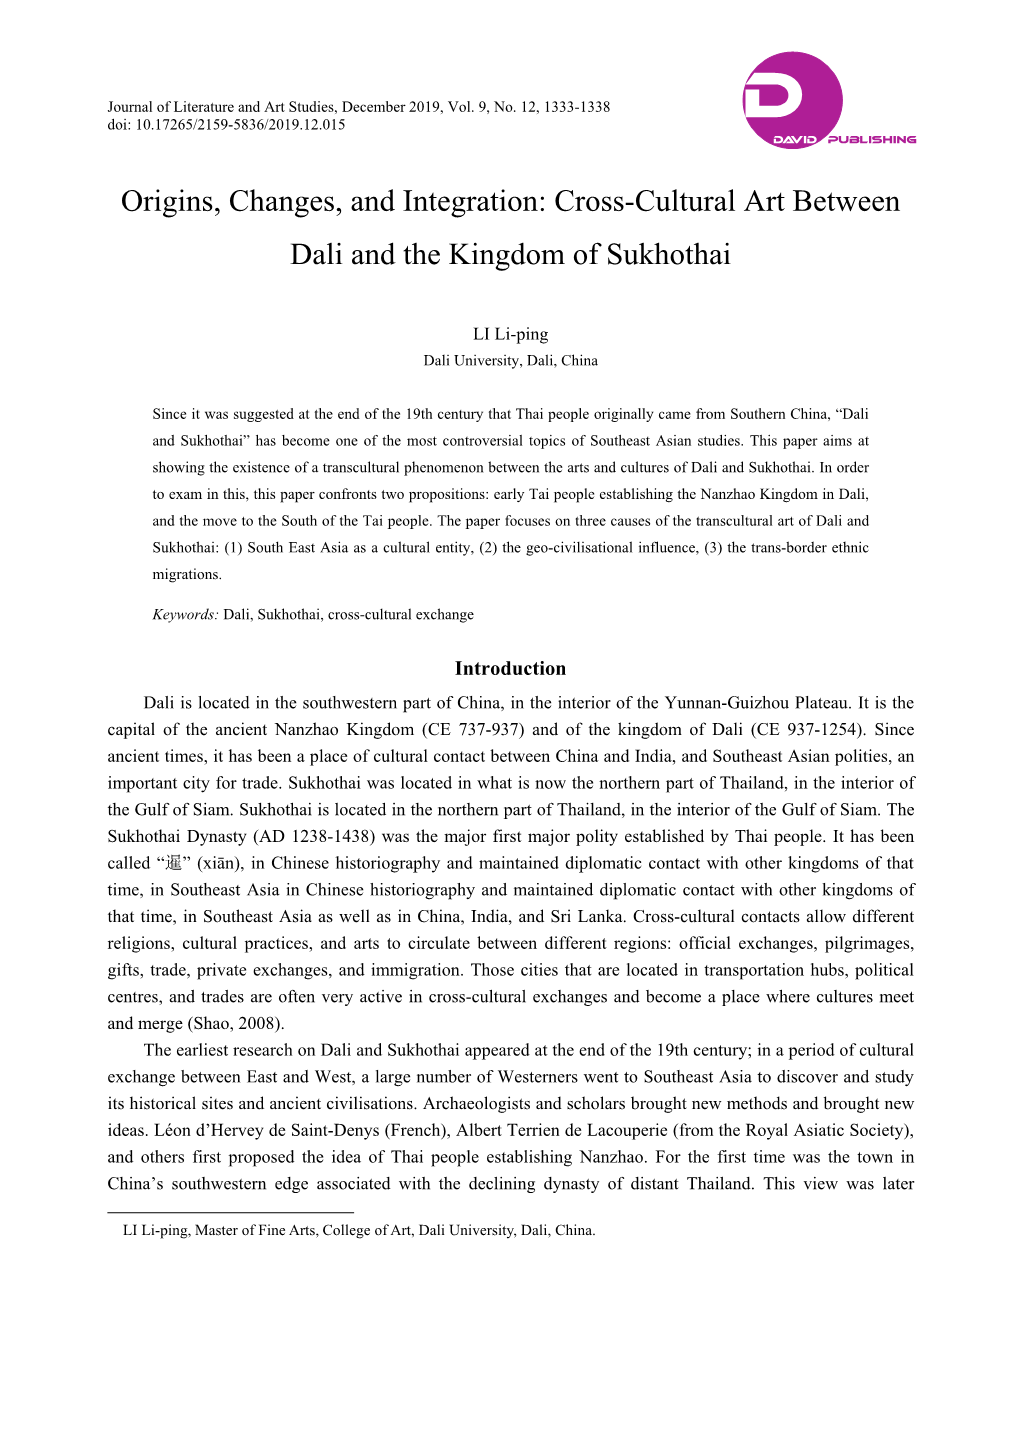 Cross-Cultural Art Between Dali and the Kingdom of Sukhothai